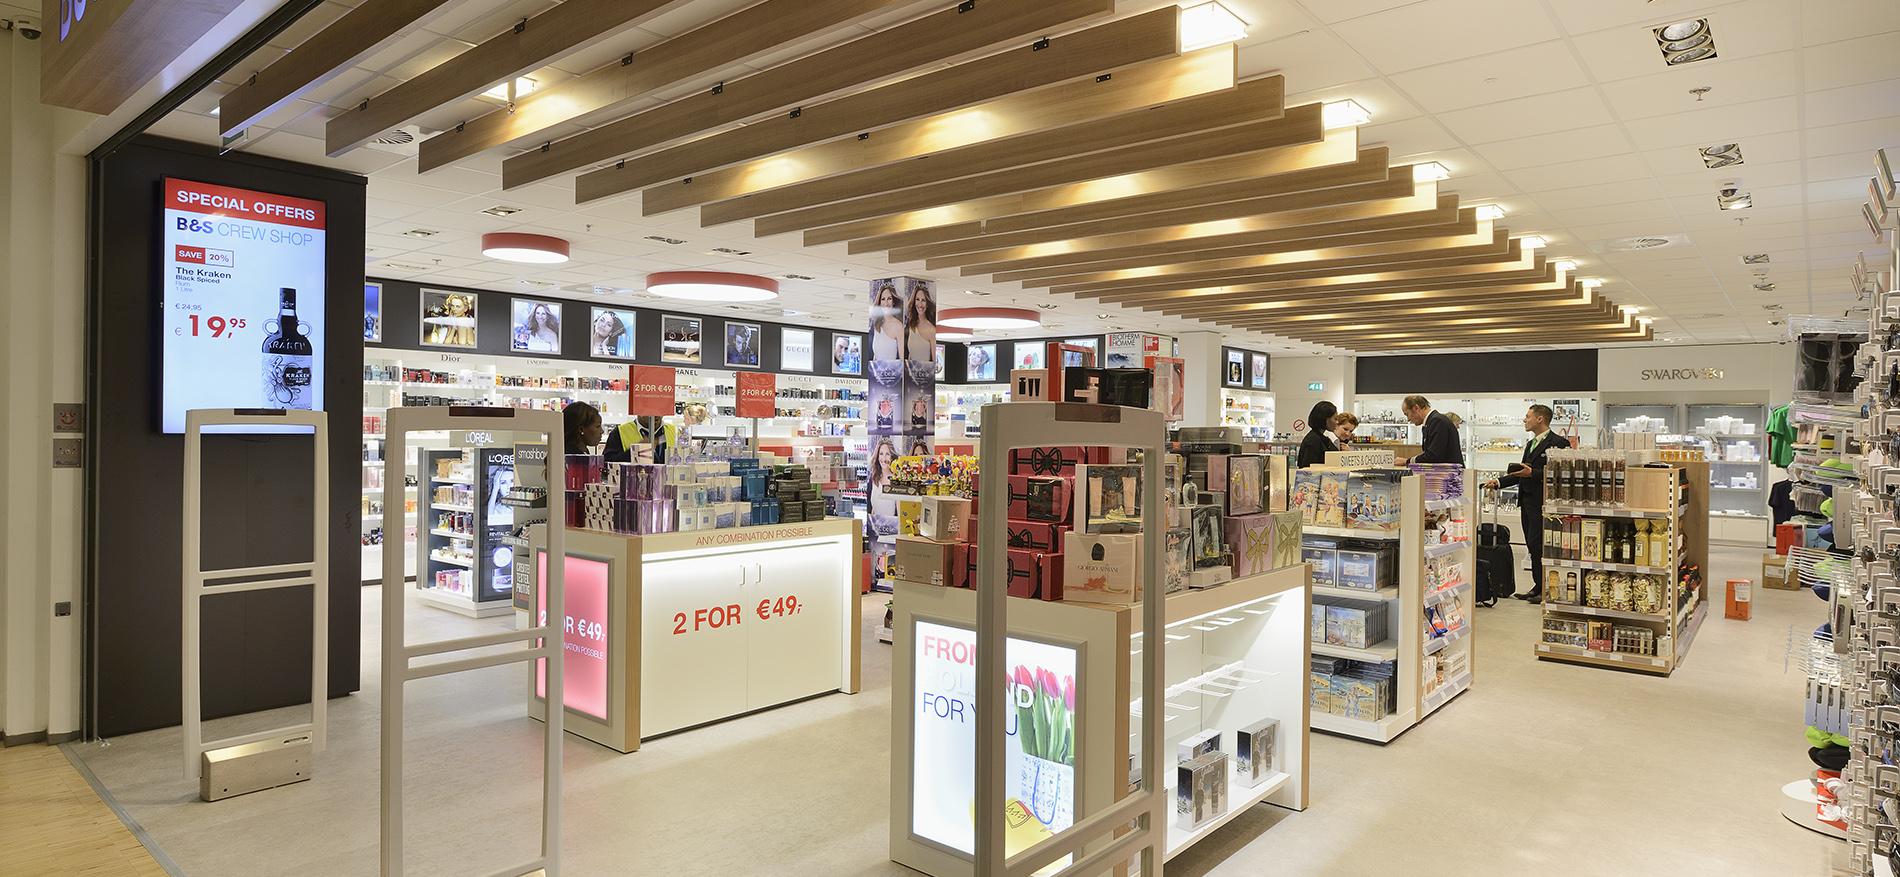 B&S Crew Shop – Winkelinrichting Luchthaven Schiphol - Retail design